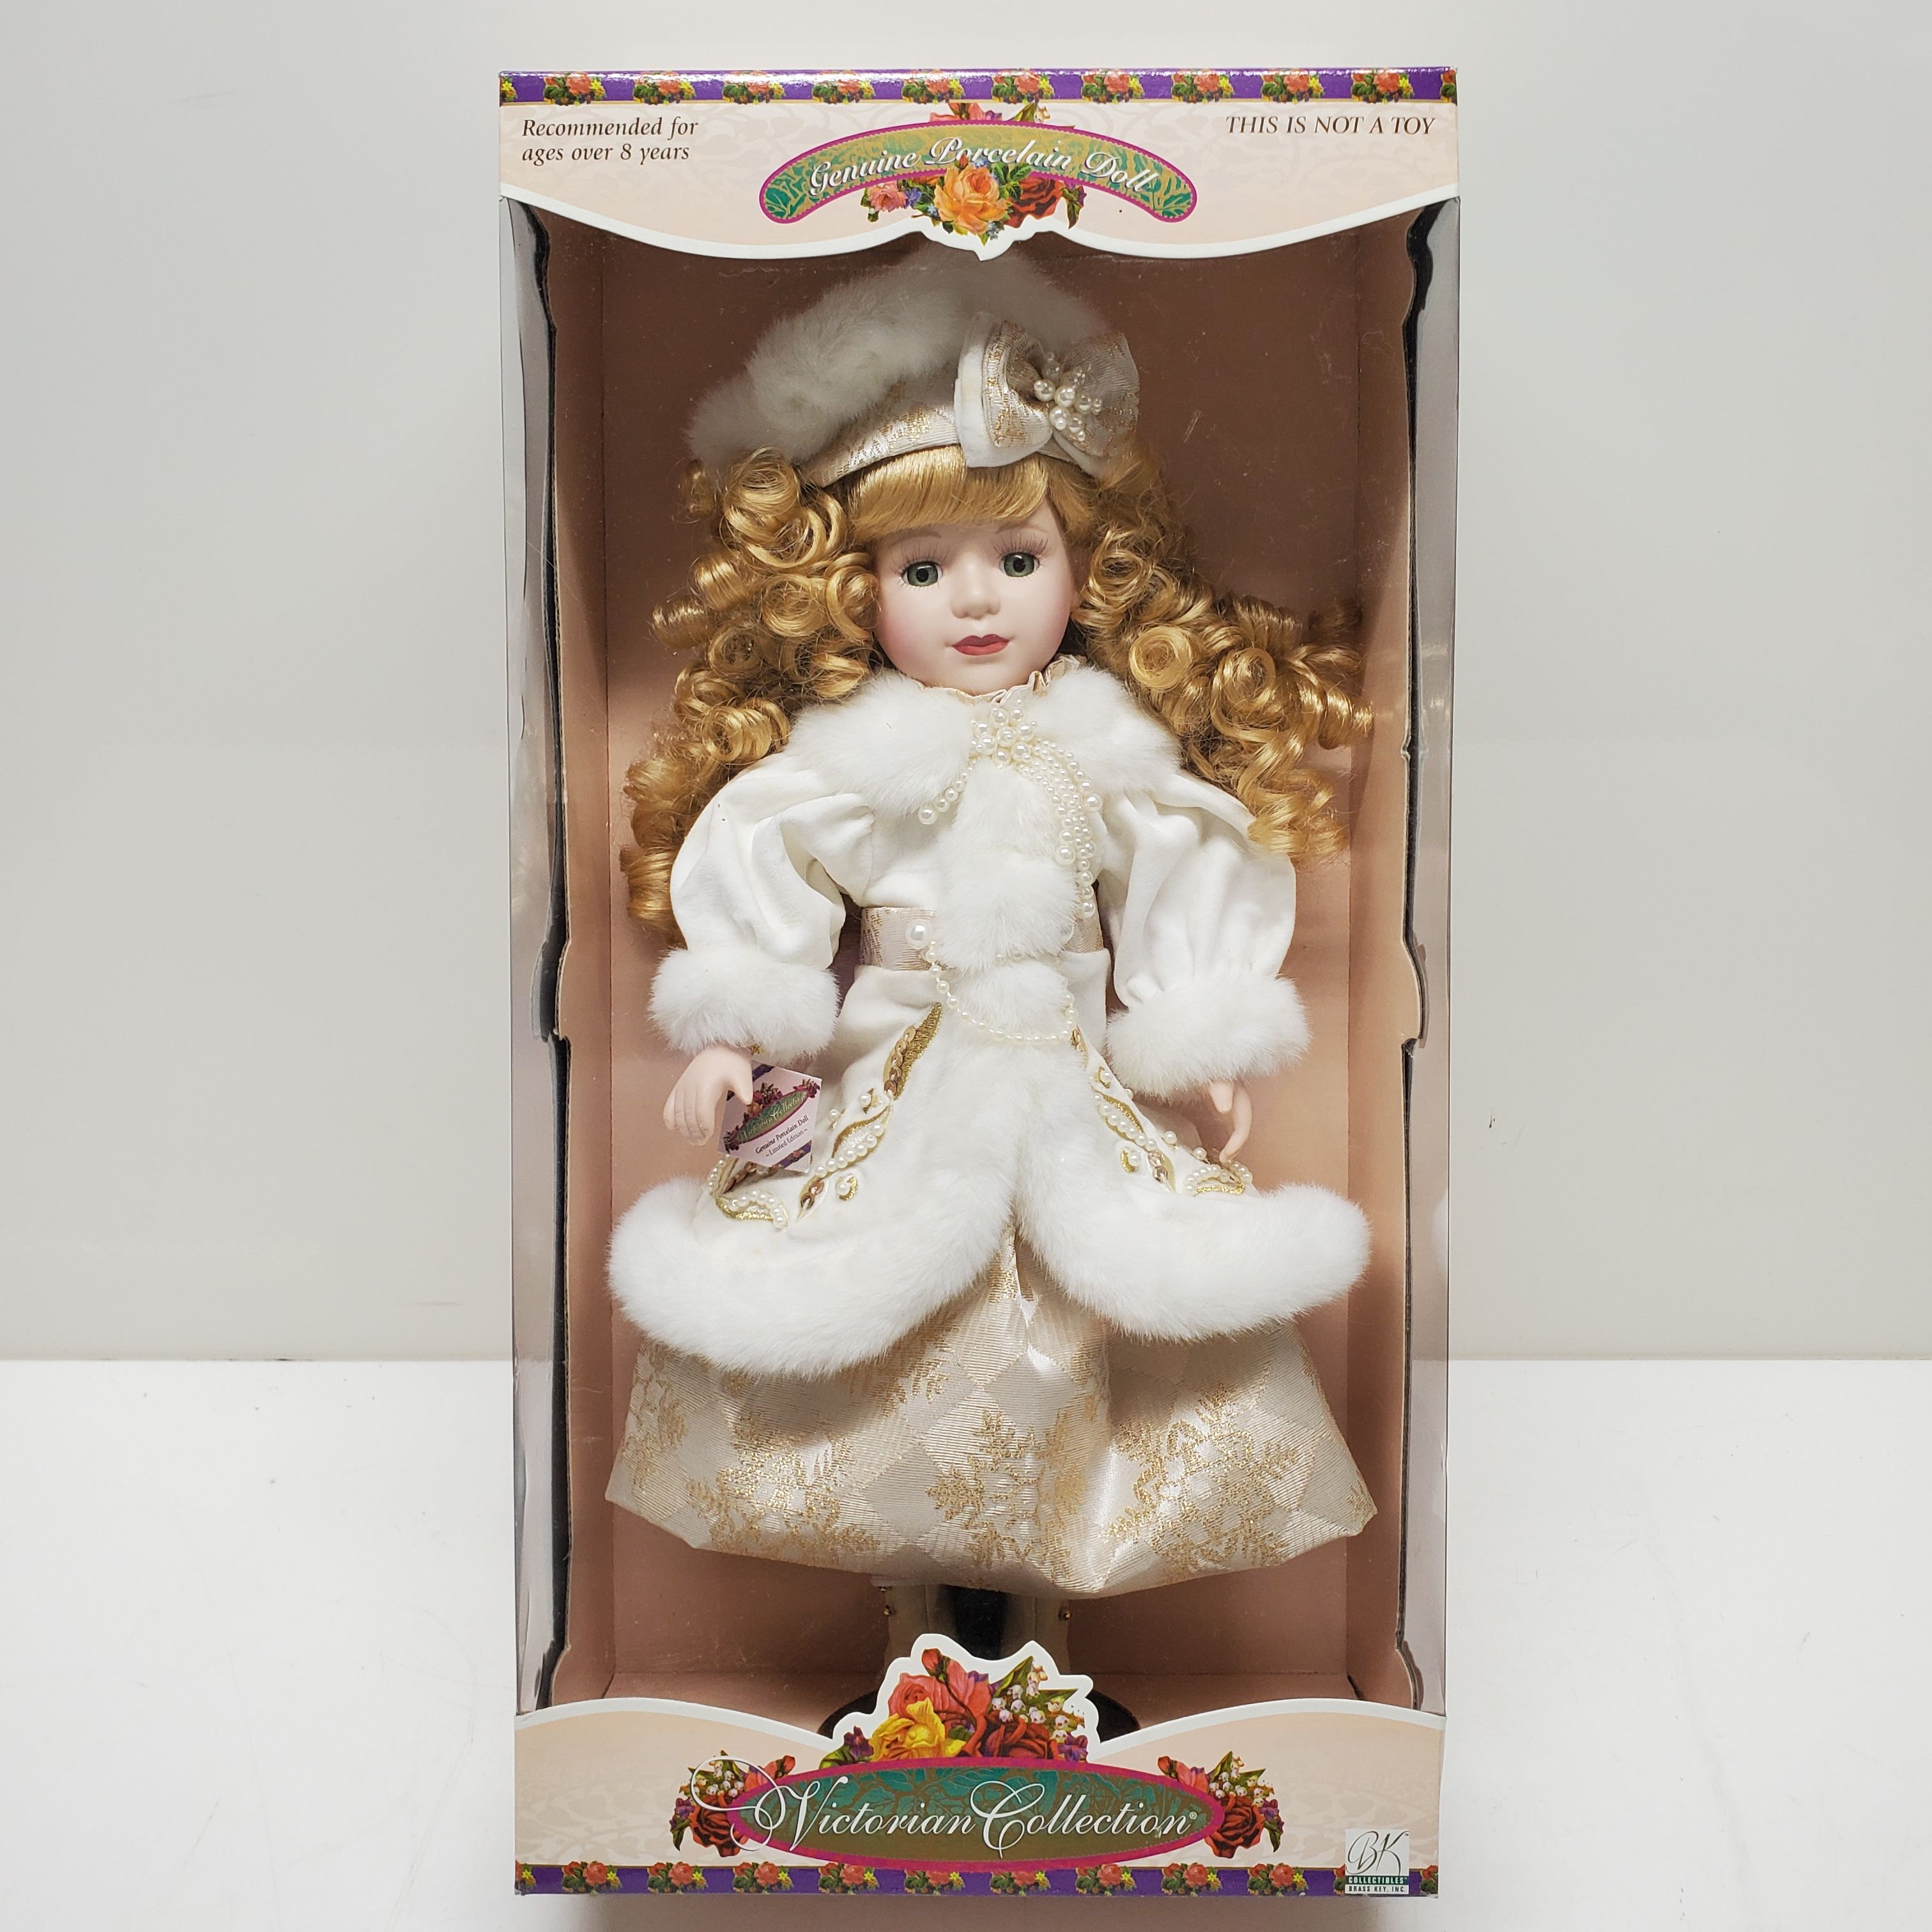 How Porcelain Dolls Became the Ultimate Victorian Status Symbol